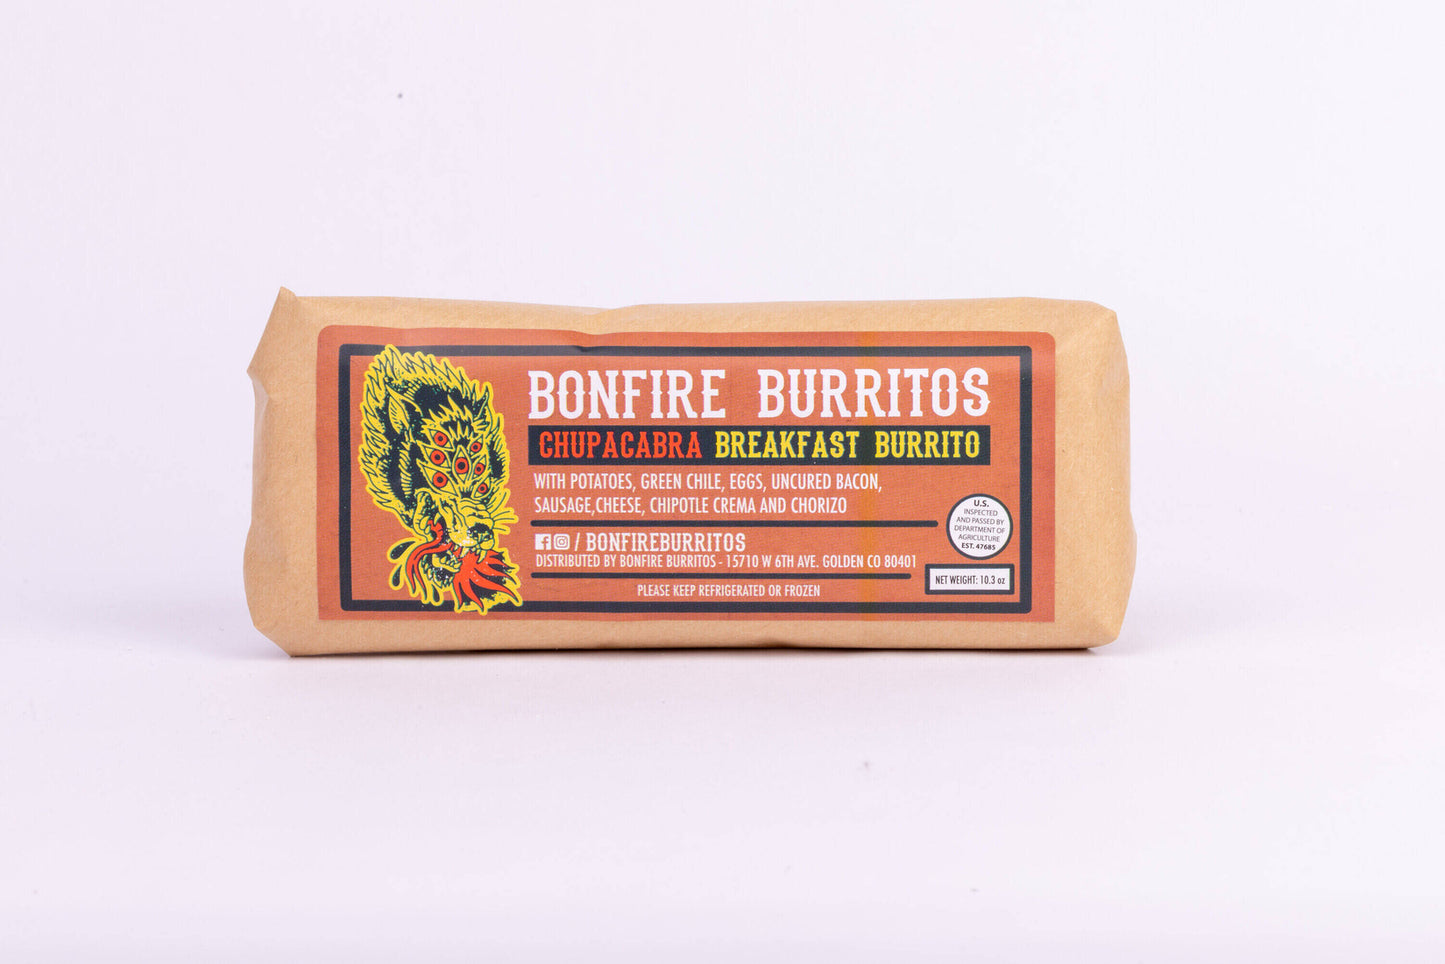 Bonfire Burrito Chupacabra (4 pack)